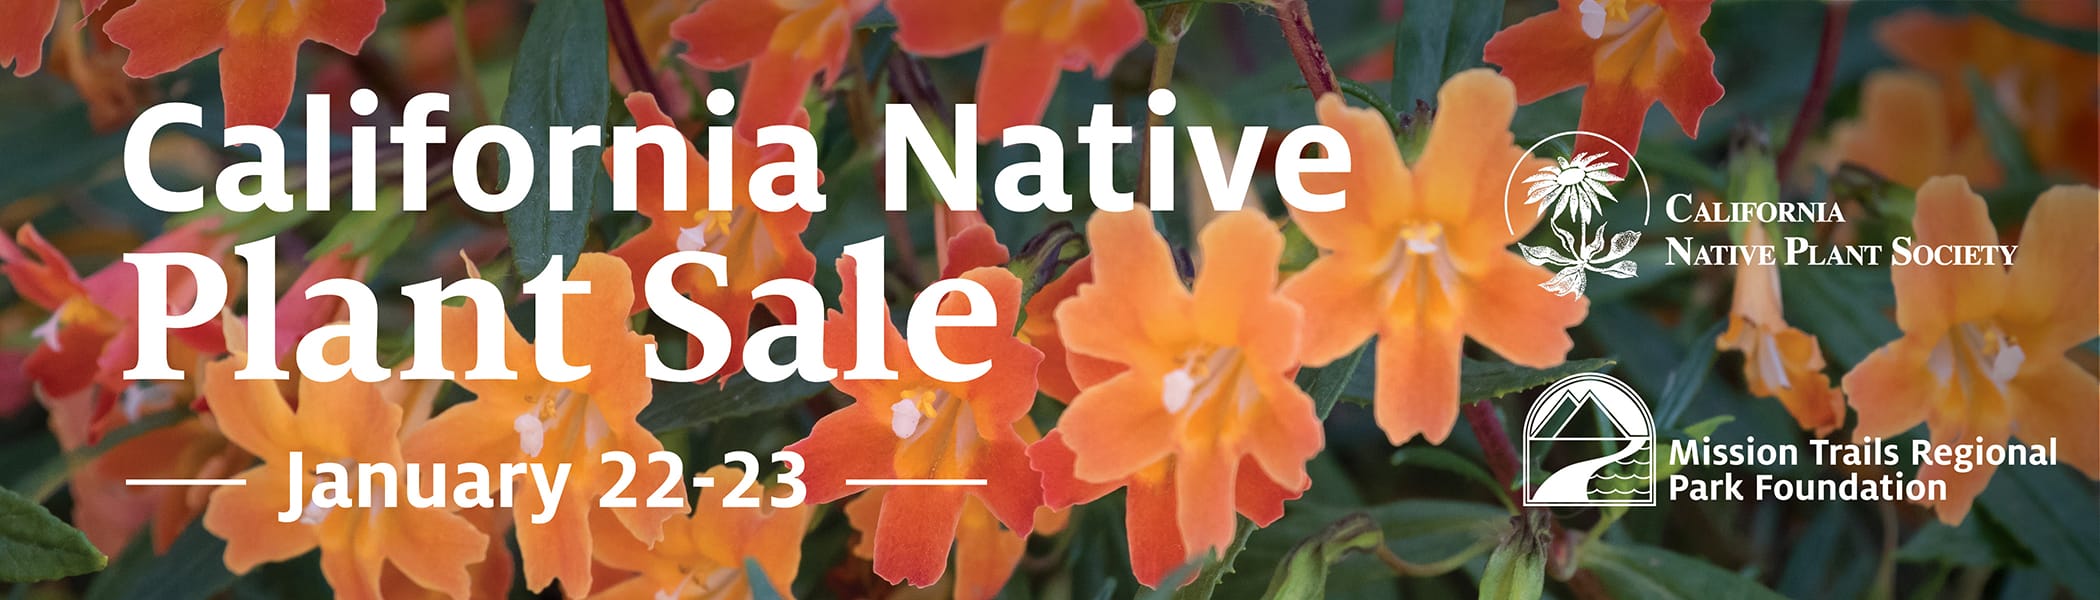 California Native Plant Sale - January 22-23 - California Native Plant Society - Mission Trails Regional Park Foundation